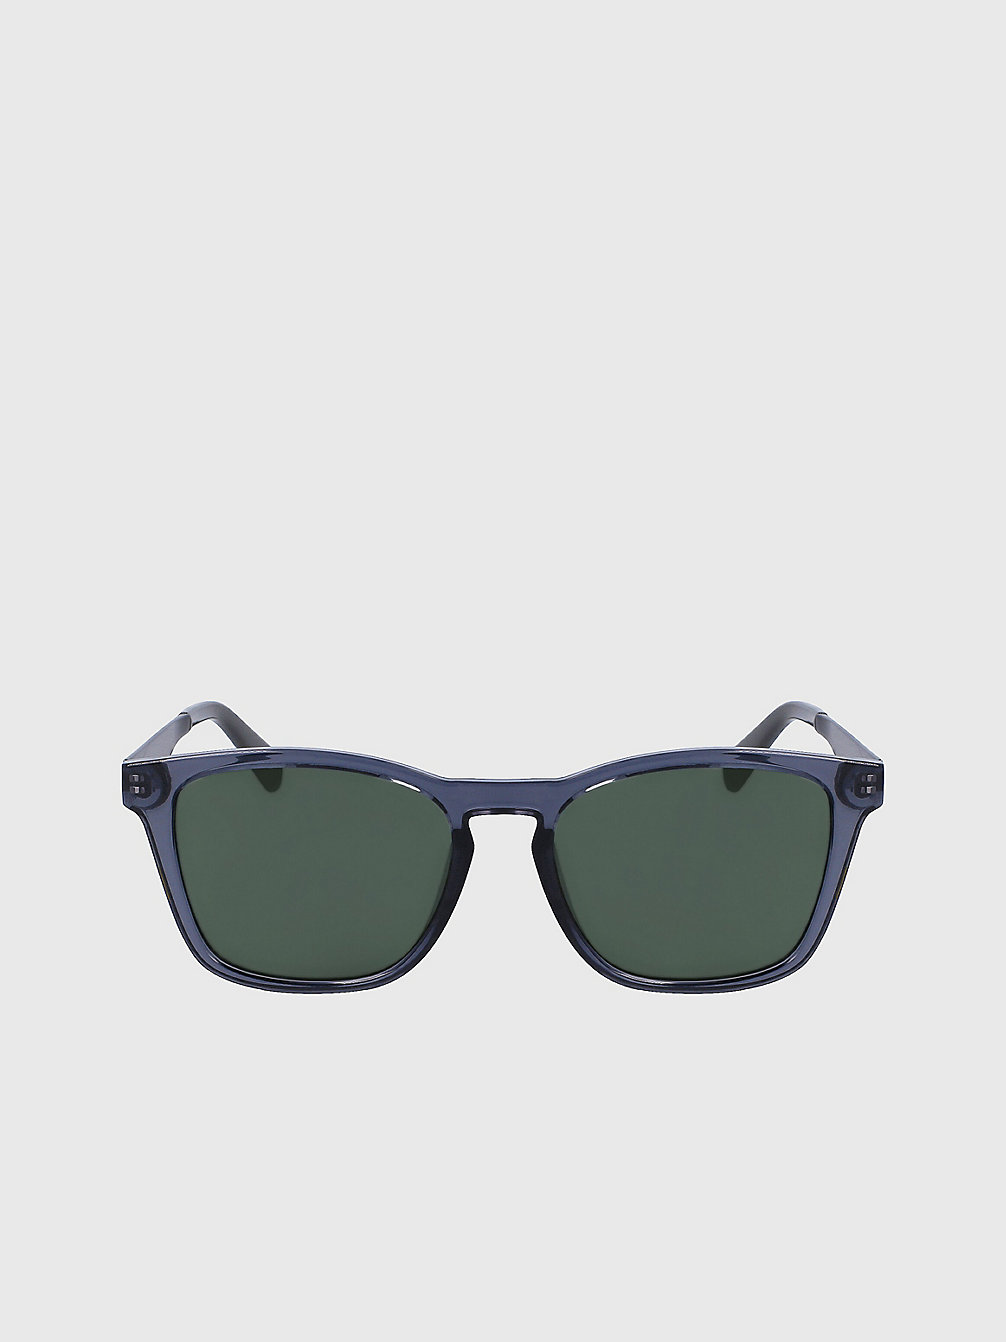 GRAY > Прямоугольные солнцезащитные очки Ckj22642s > undefined женщины - Calvin Klein